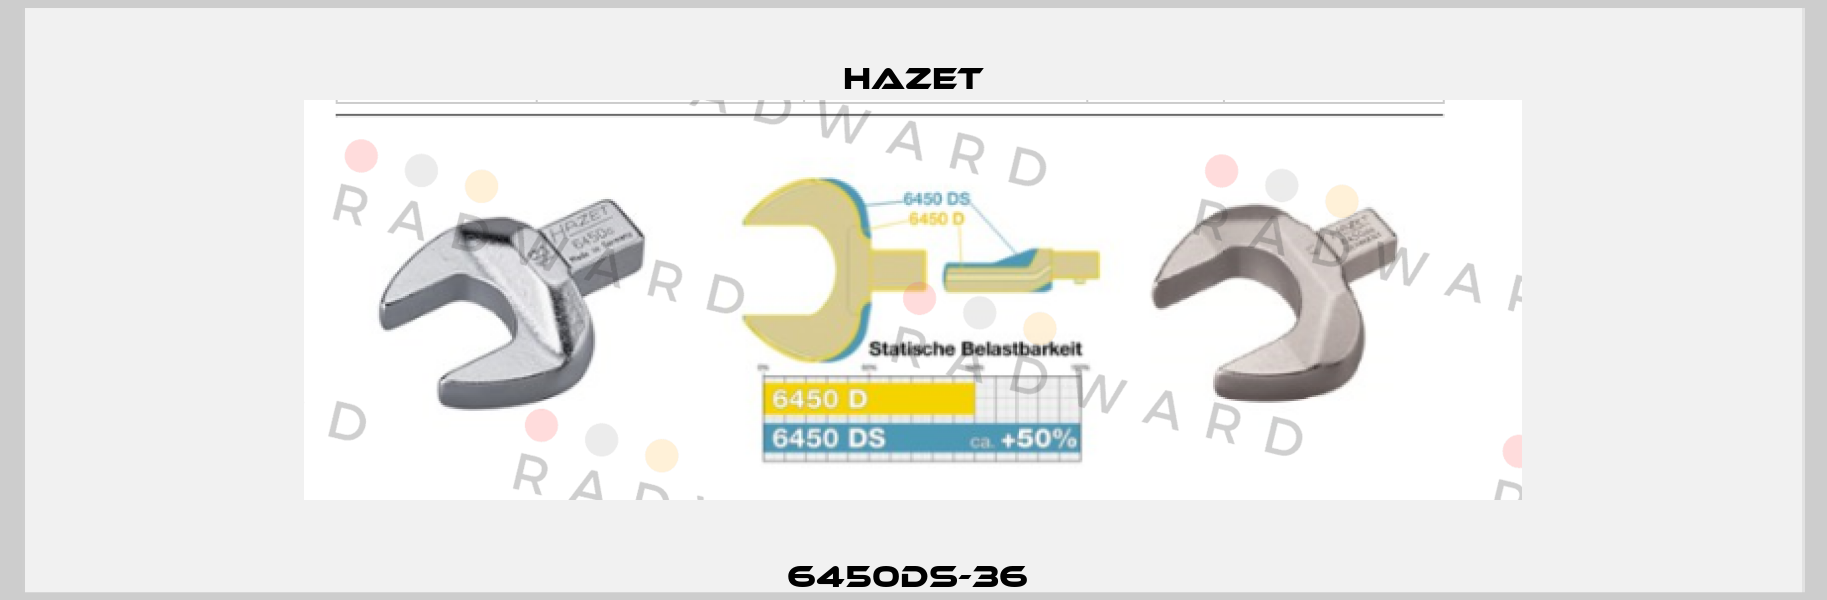 6450DS-36  Hazet